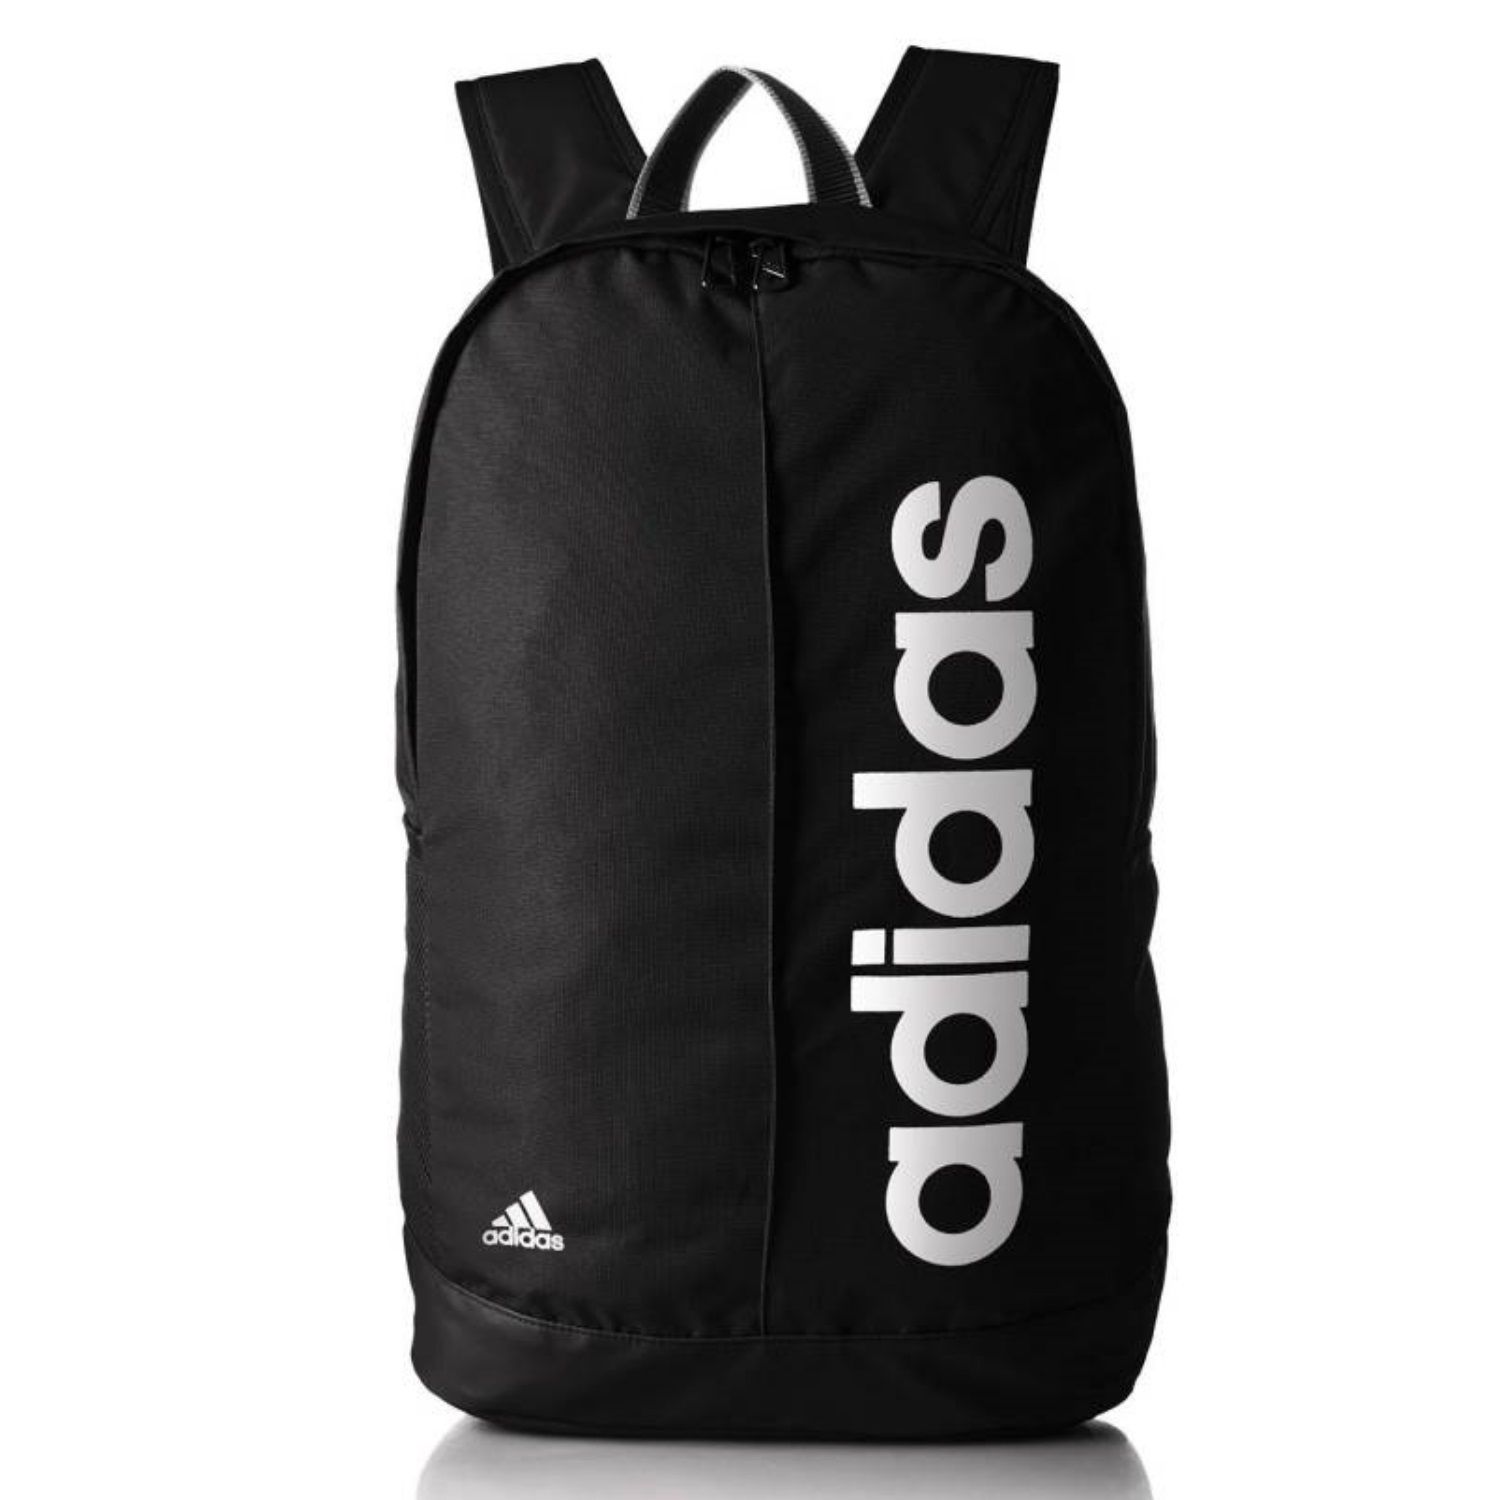 buy adidas school bags online Sale,up 